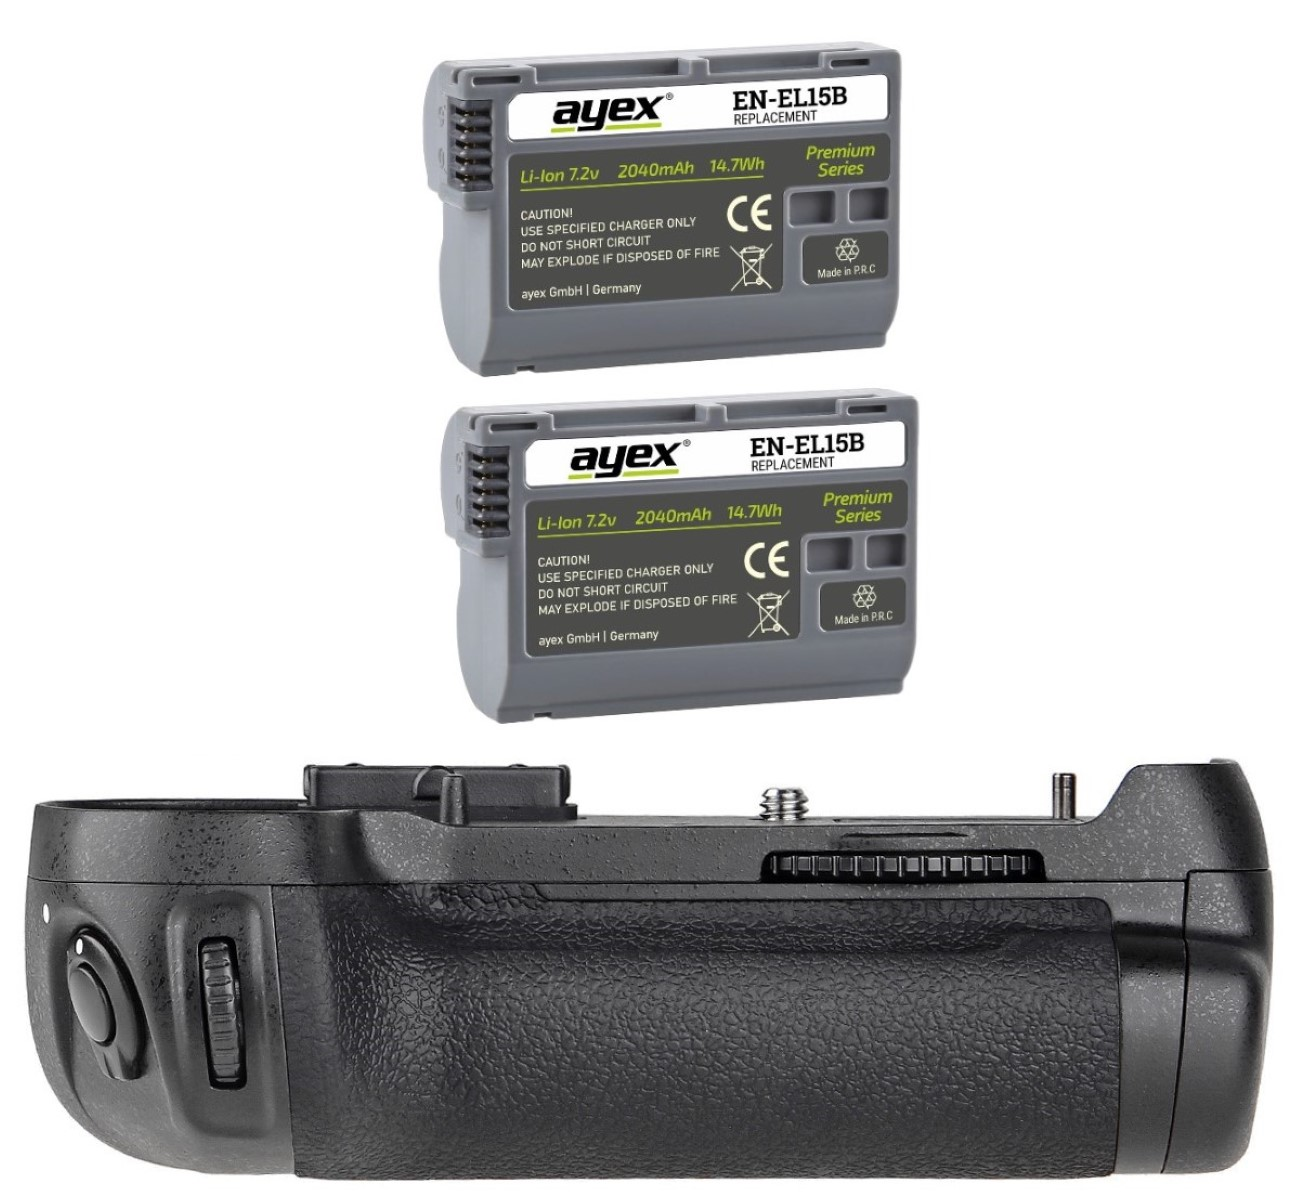 AYEX für EN-EL15B wie Schwarz D600 Set, Akku, Nikon 2x D610 MB-D14 Batteriegriff + Batteriegriff Set